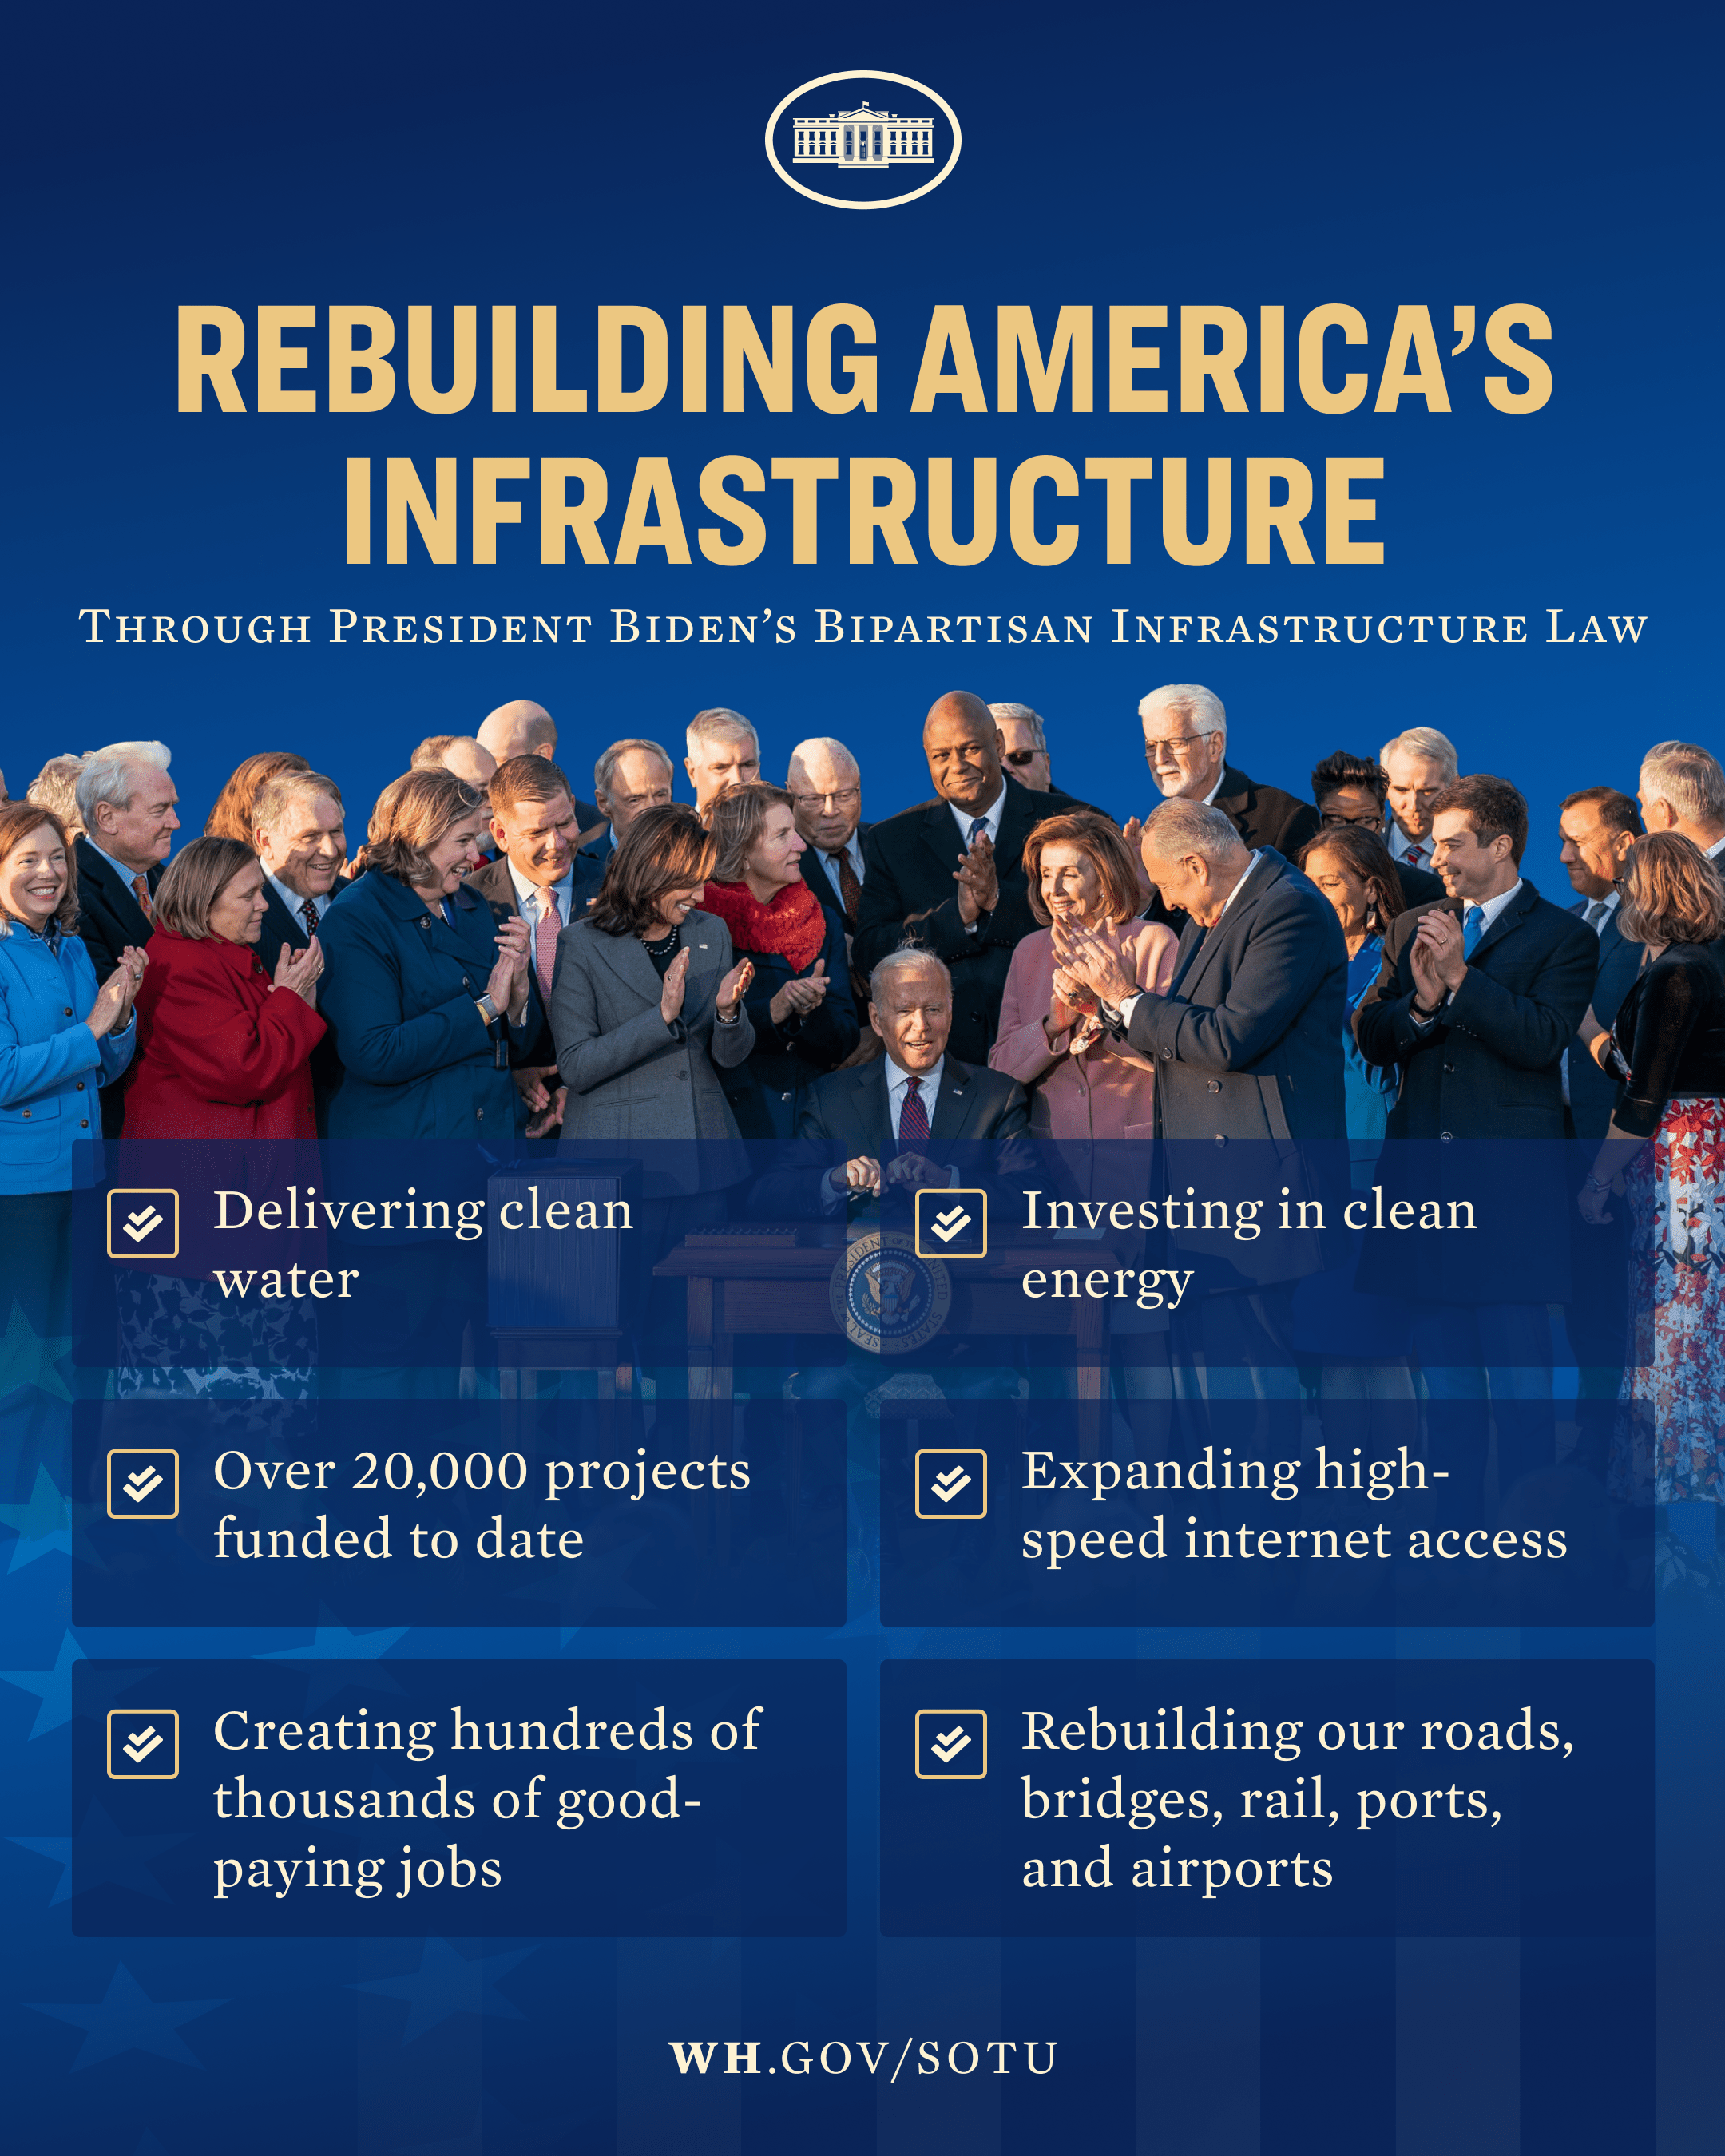 Rebuilding America’s Infrastructure through President Biden’s Bipartisan Infrastructure Law